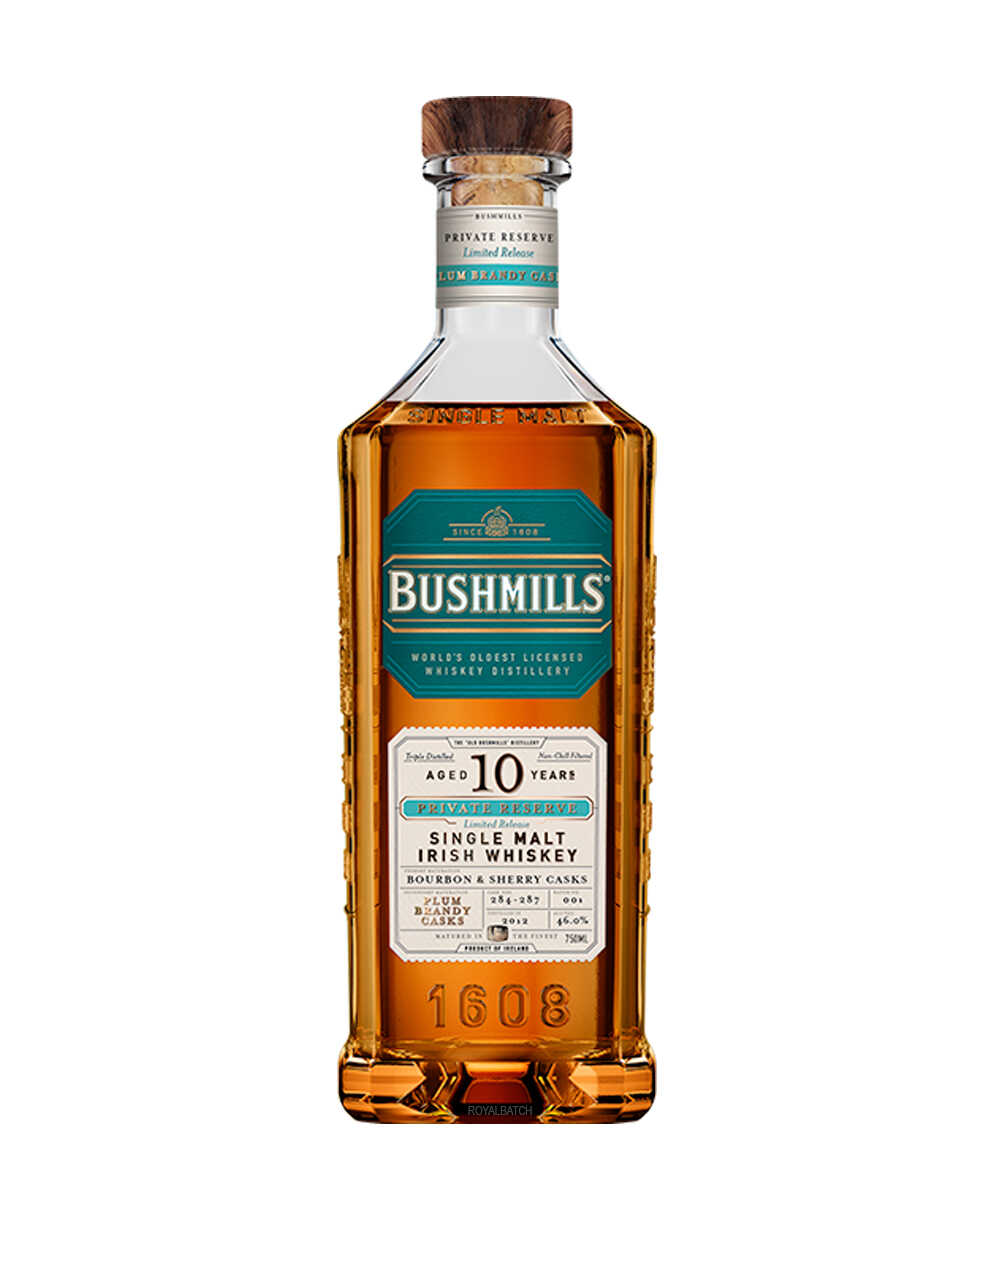 Bushmills Private Reserve Plum Brandy Casks 10 Year Old Irish Whiskey